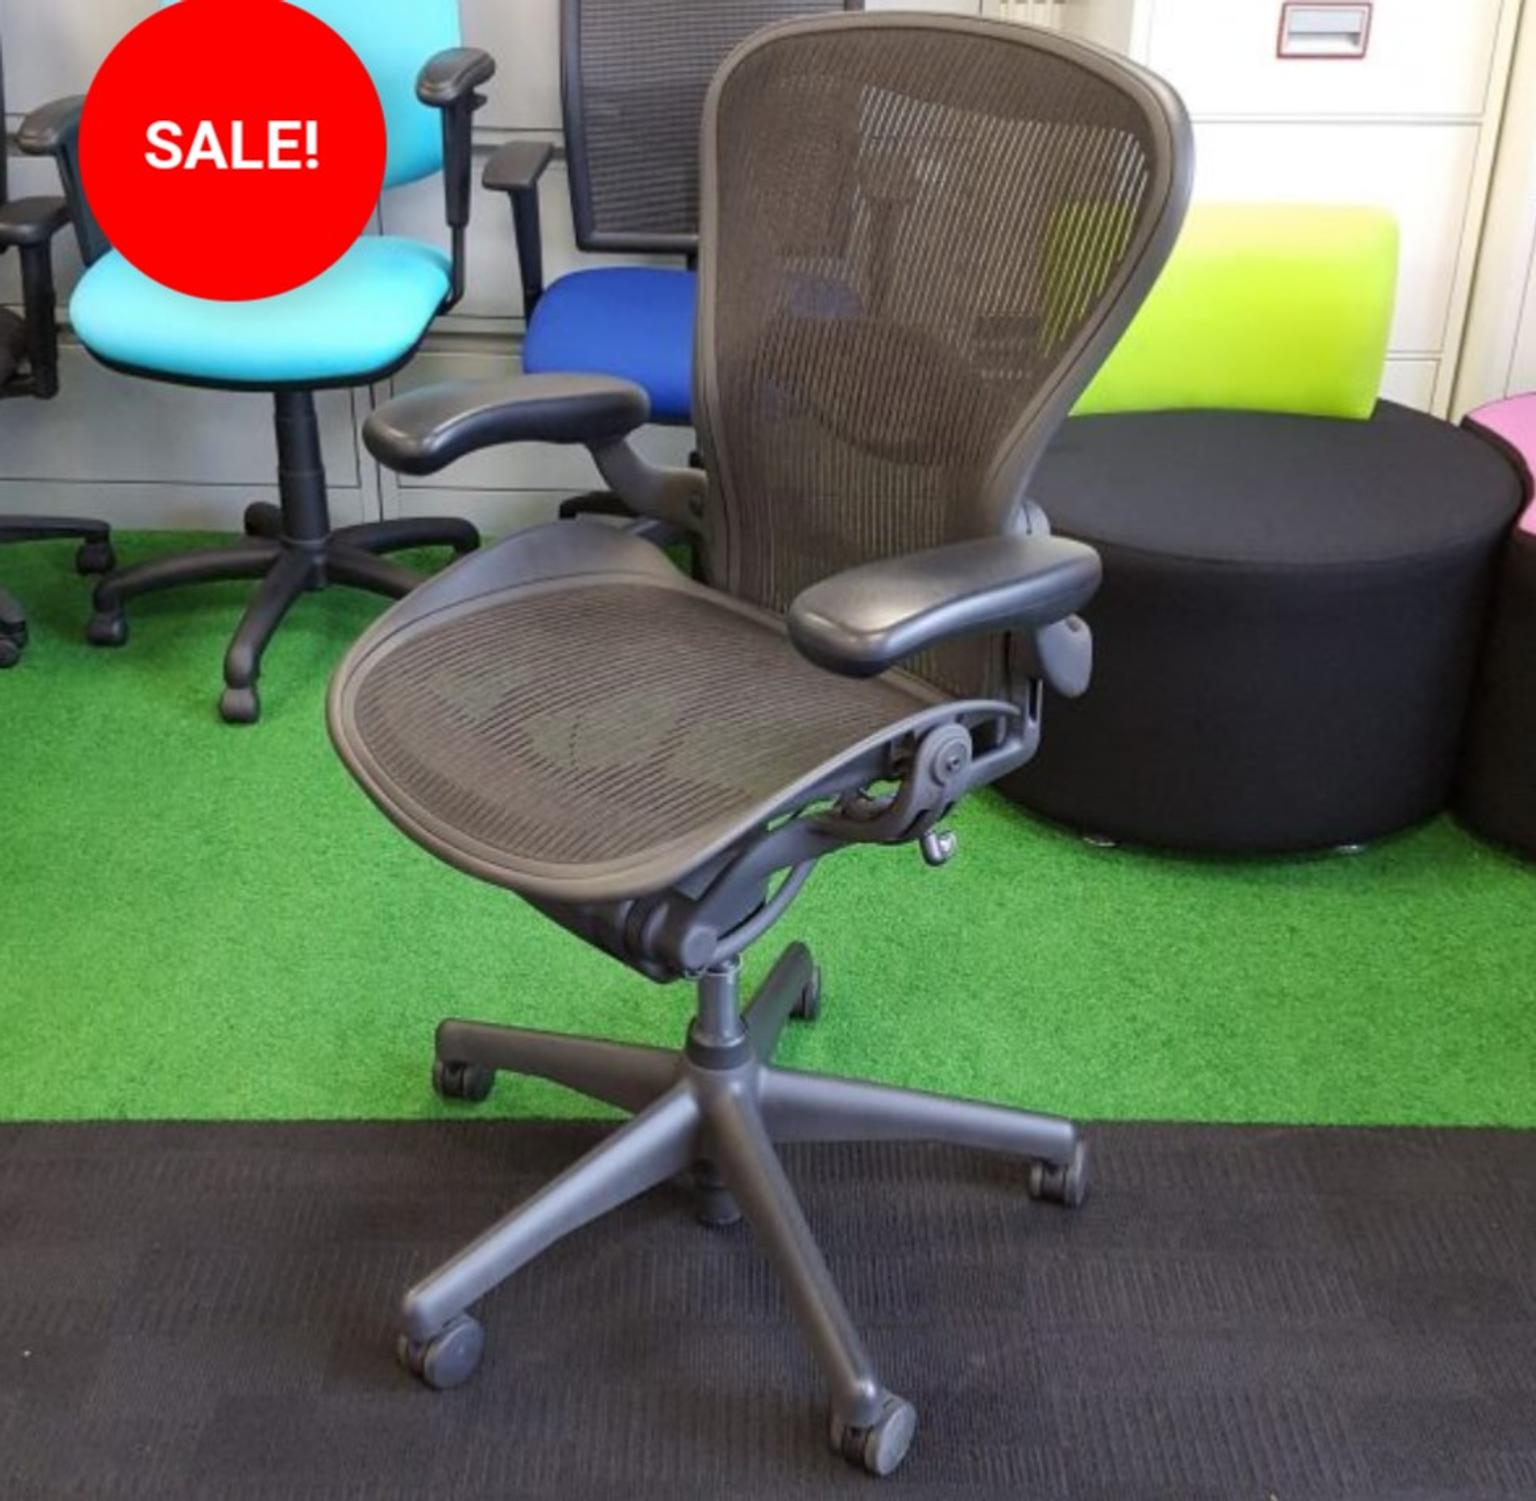 Herman Miller Aeron Office Chair Cheap London In Cm20 Harlow Fur 245 00 Zum Verkauf Shpock De